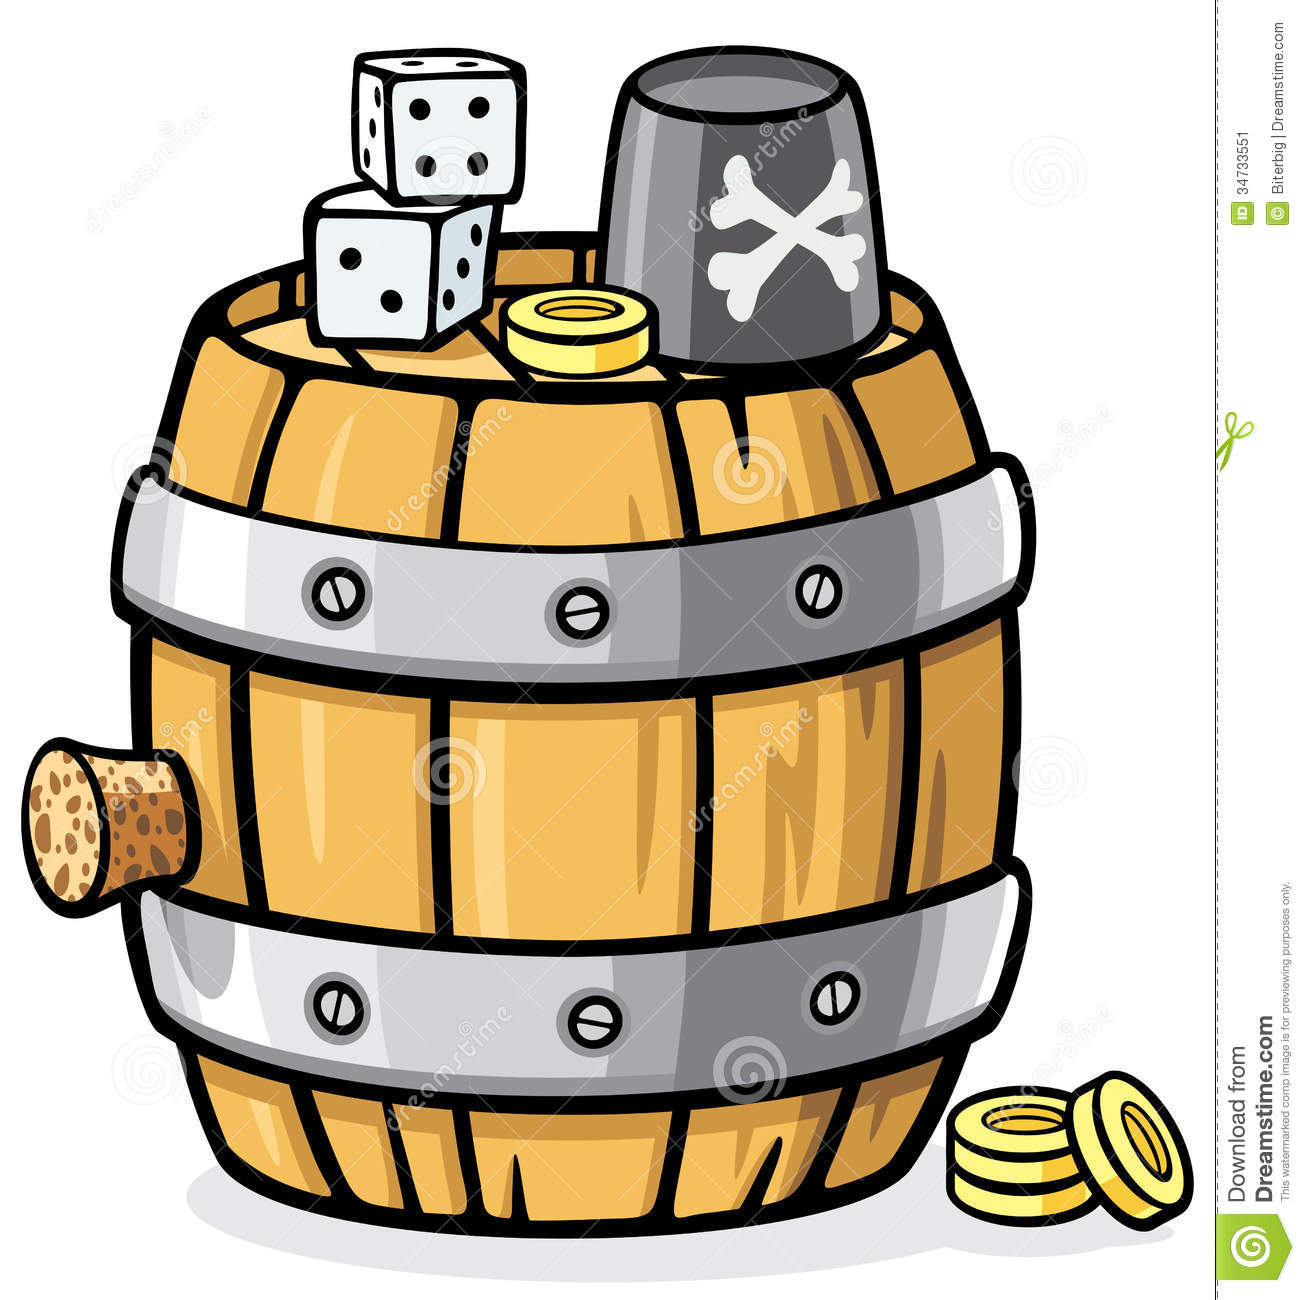 Barrel With Dice   Pirate Theme Cartoons Stock Image   Image  34733551